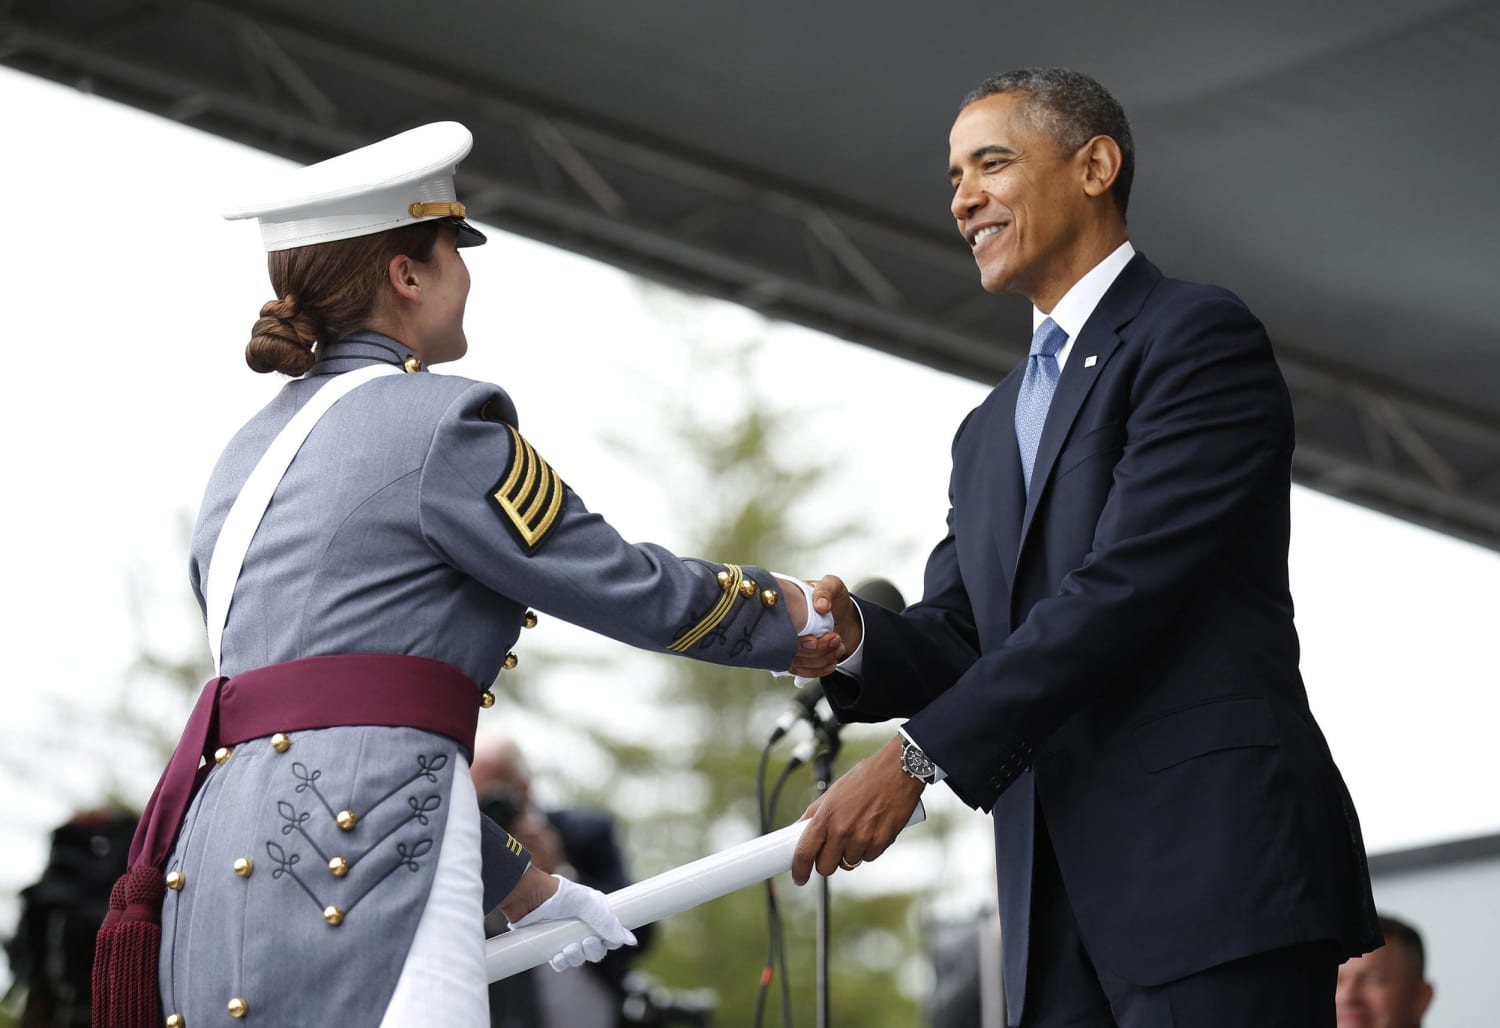 West Point Graduates Celebrate After Obamas Commencement Speech.